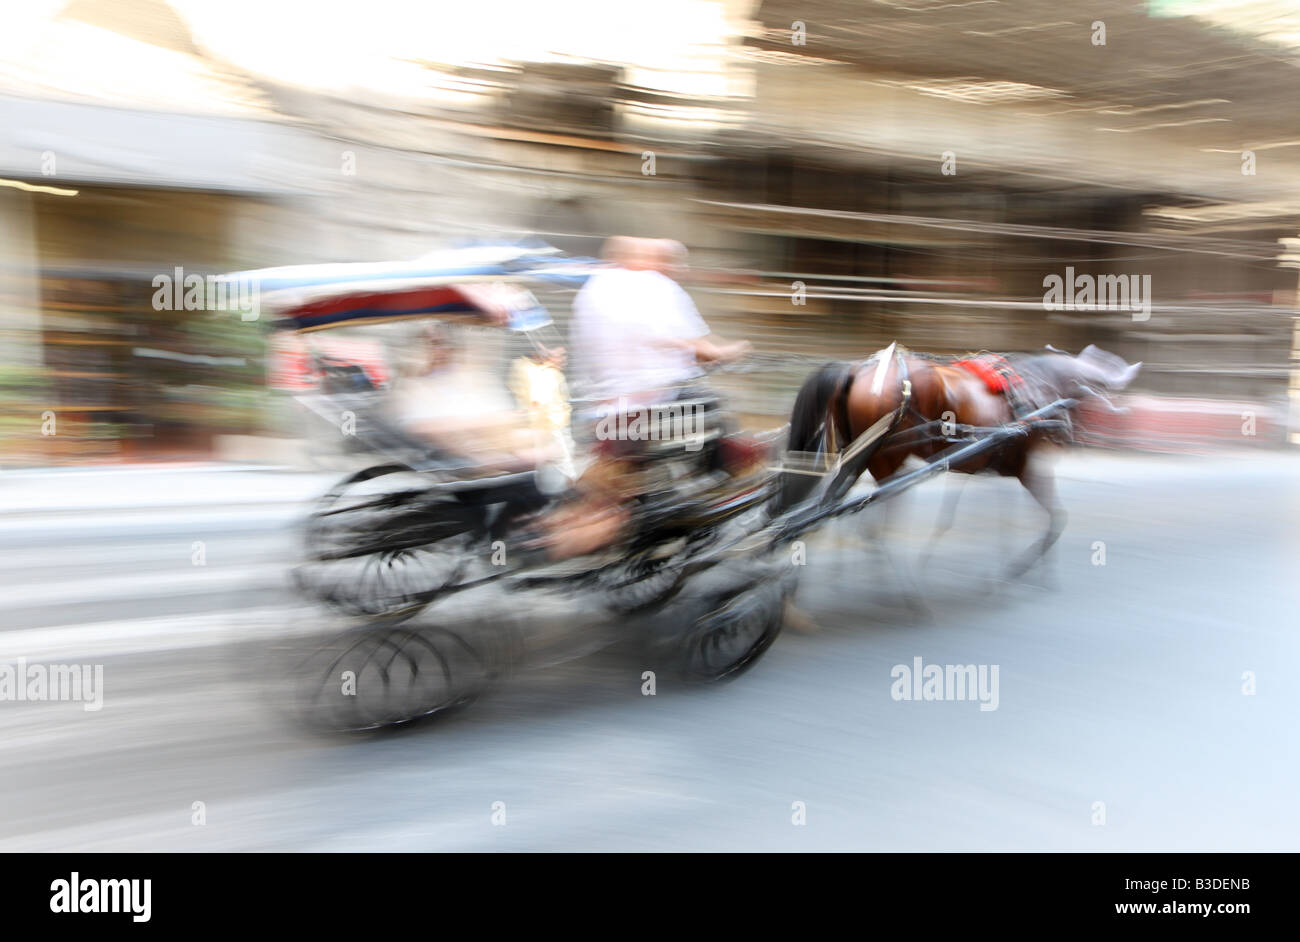 Horse drawn carriage, Palermo, Sicily, Italy Stock Photo